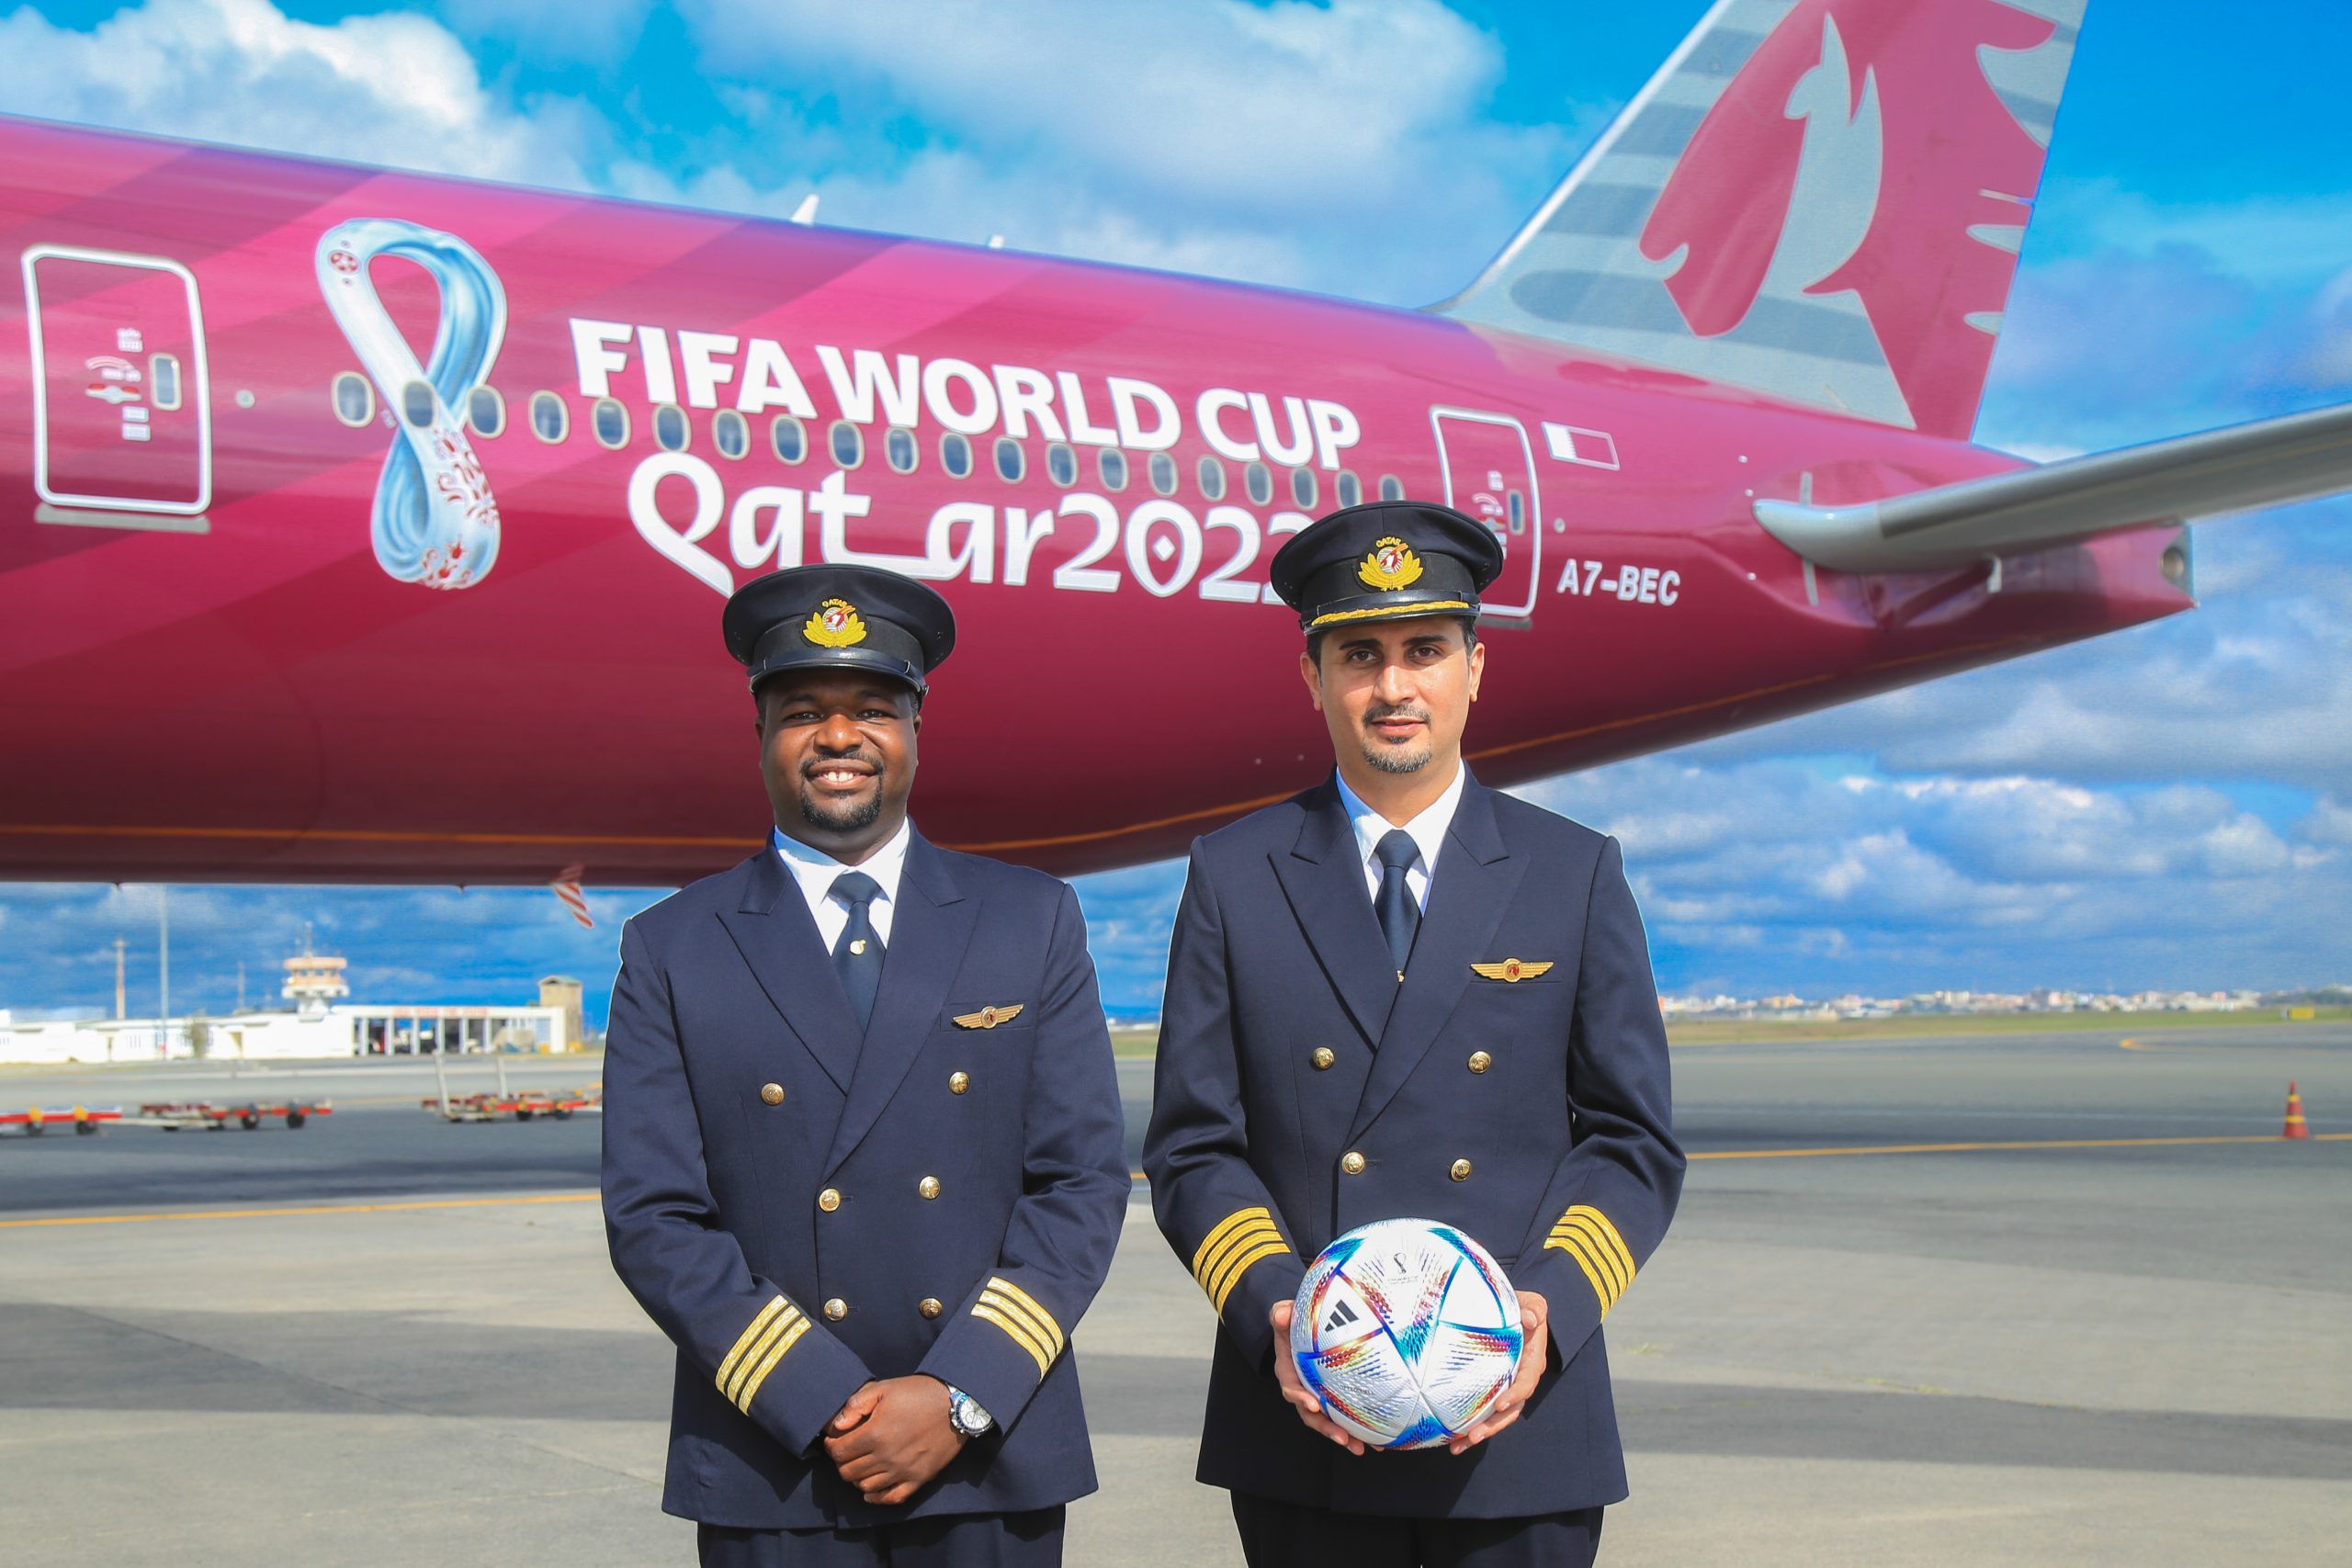 Qatar Airways Special FIFA World Cup Qatar 2022TM Livery Aircraft Makes Its  Debut In Nairobi - Kenyan Collective